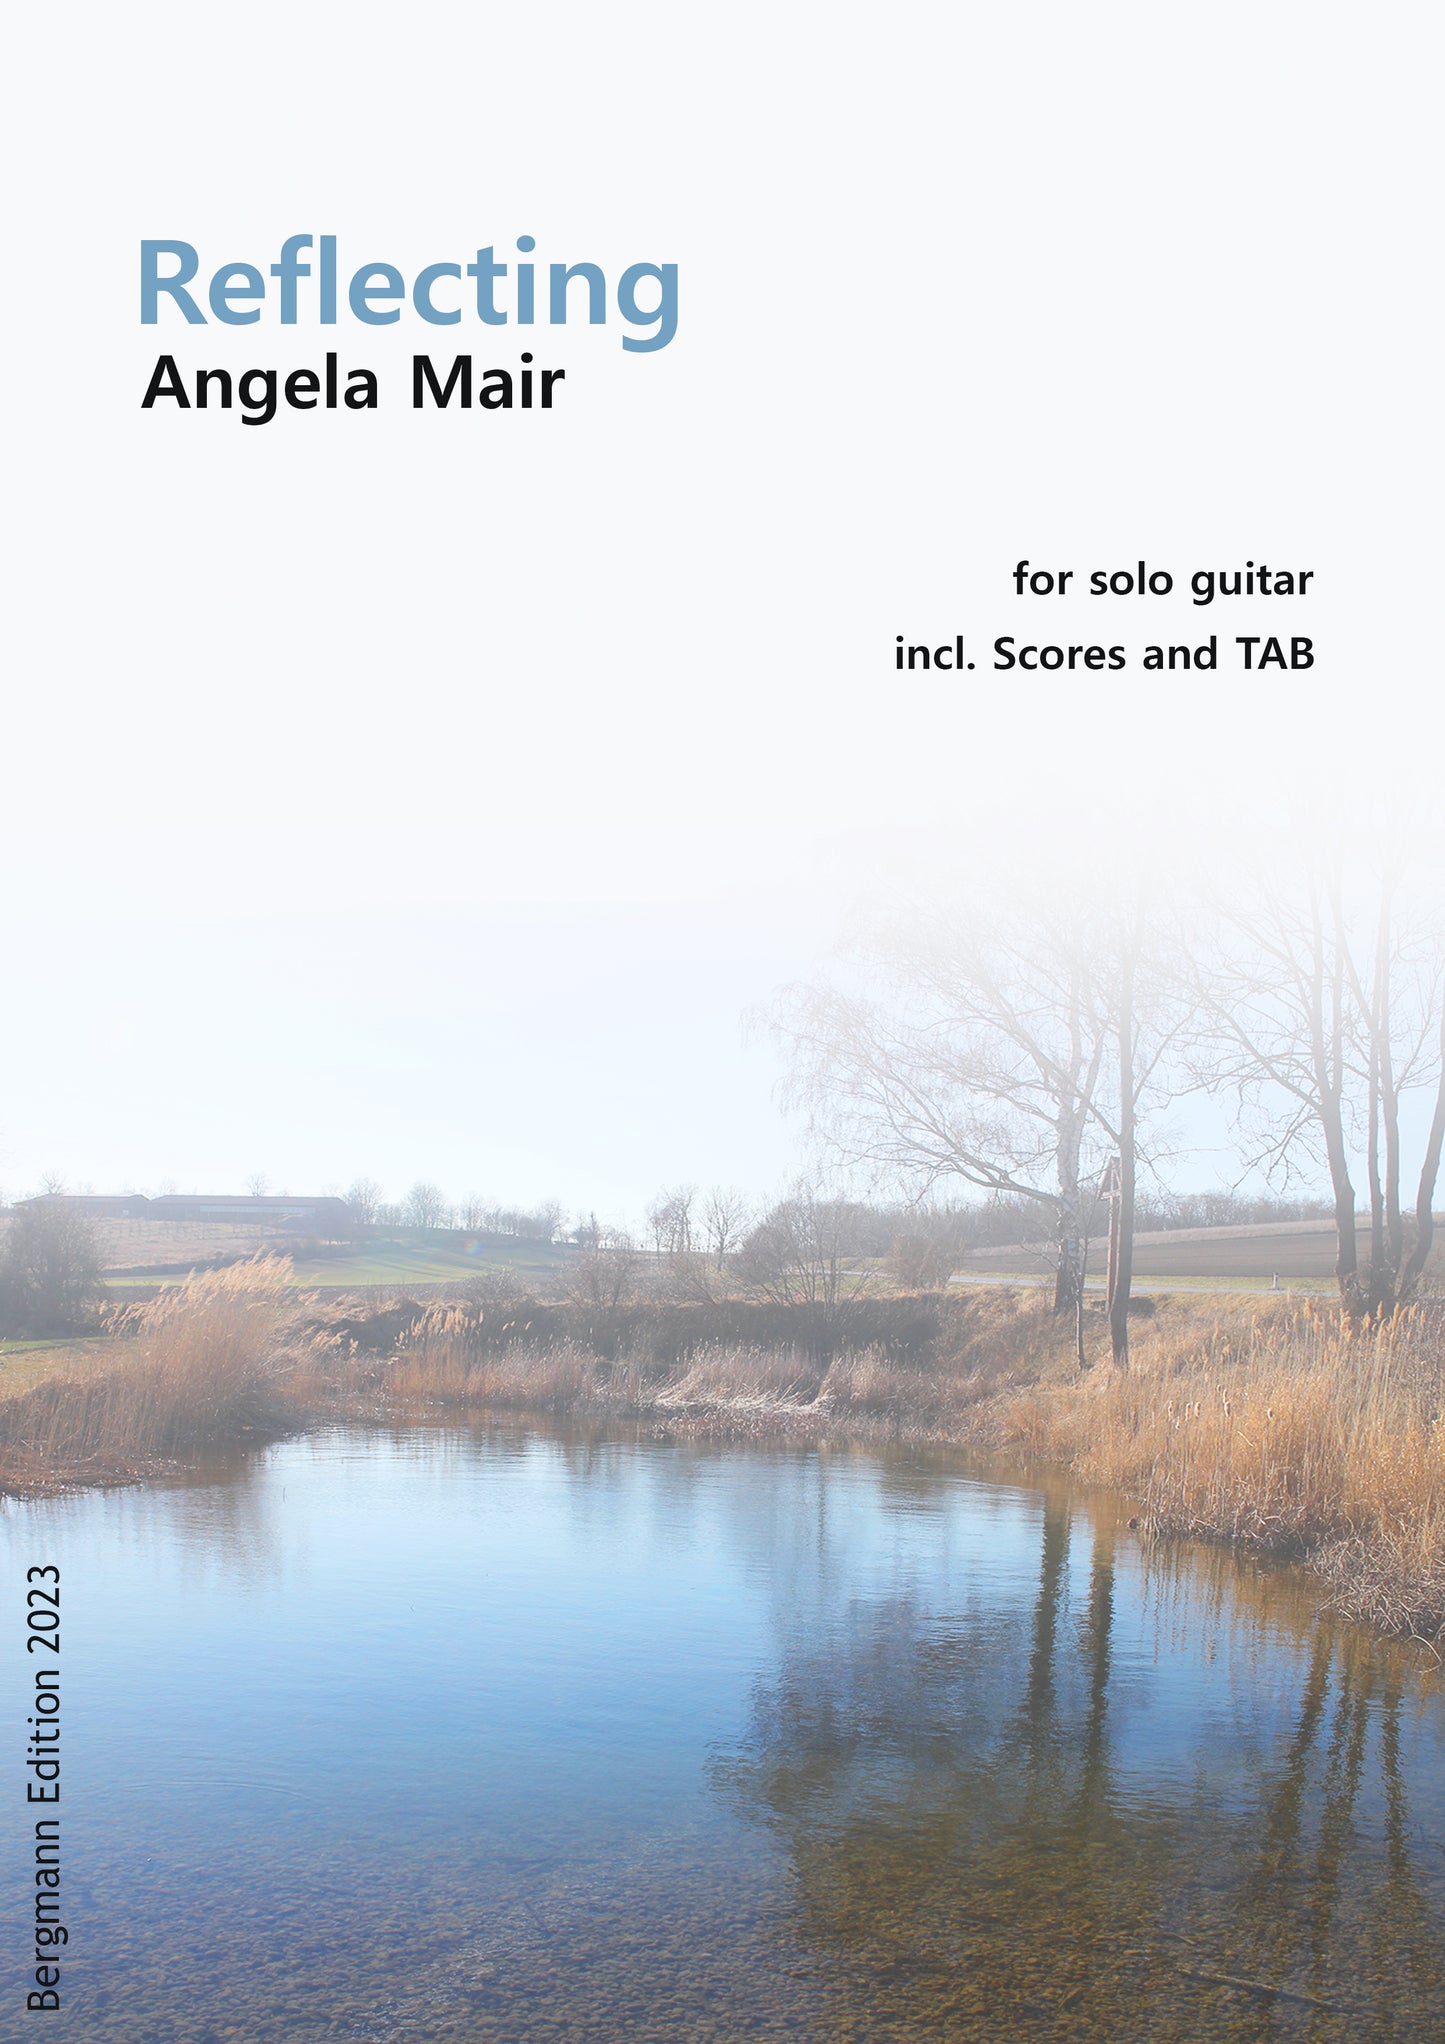 Angela Mair, Reflecting